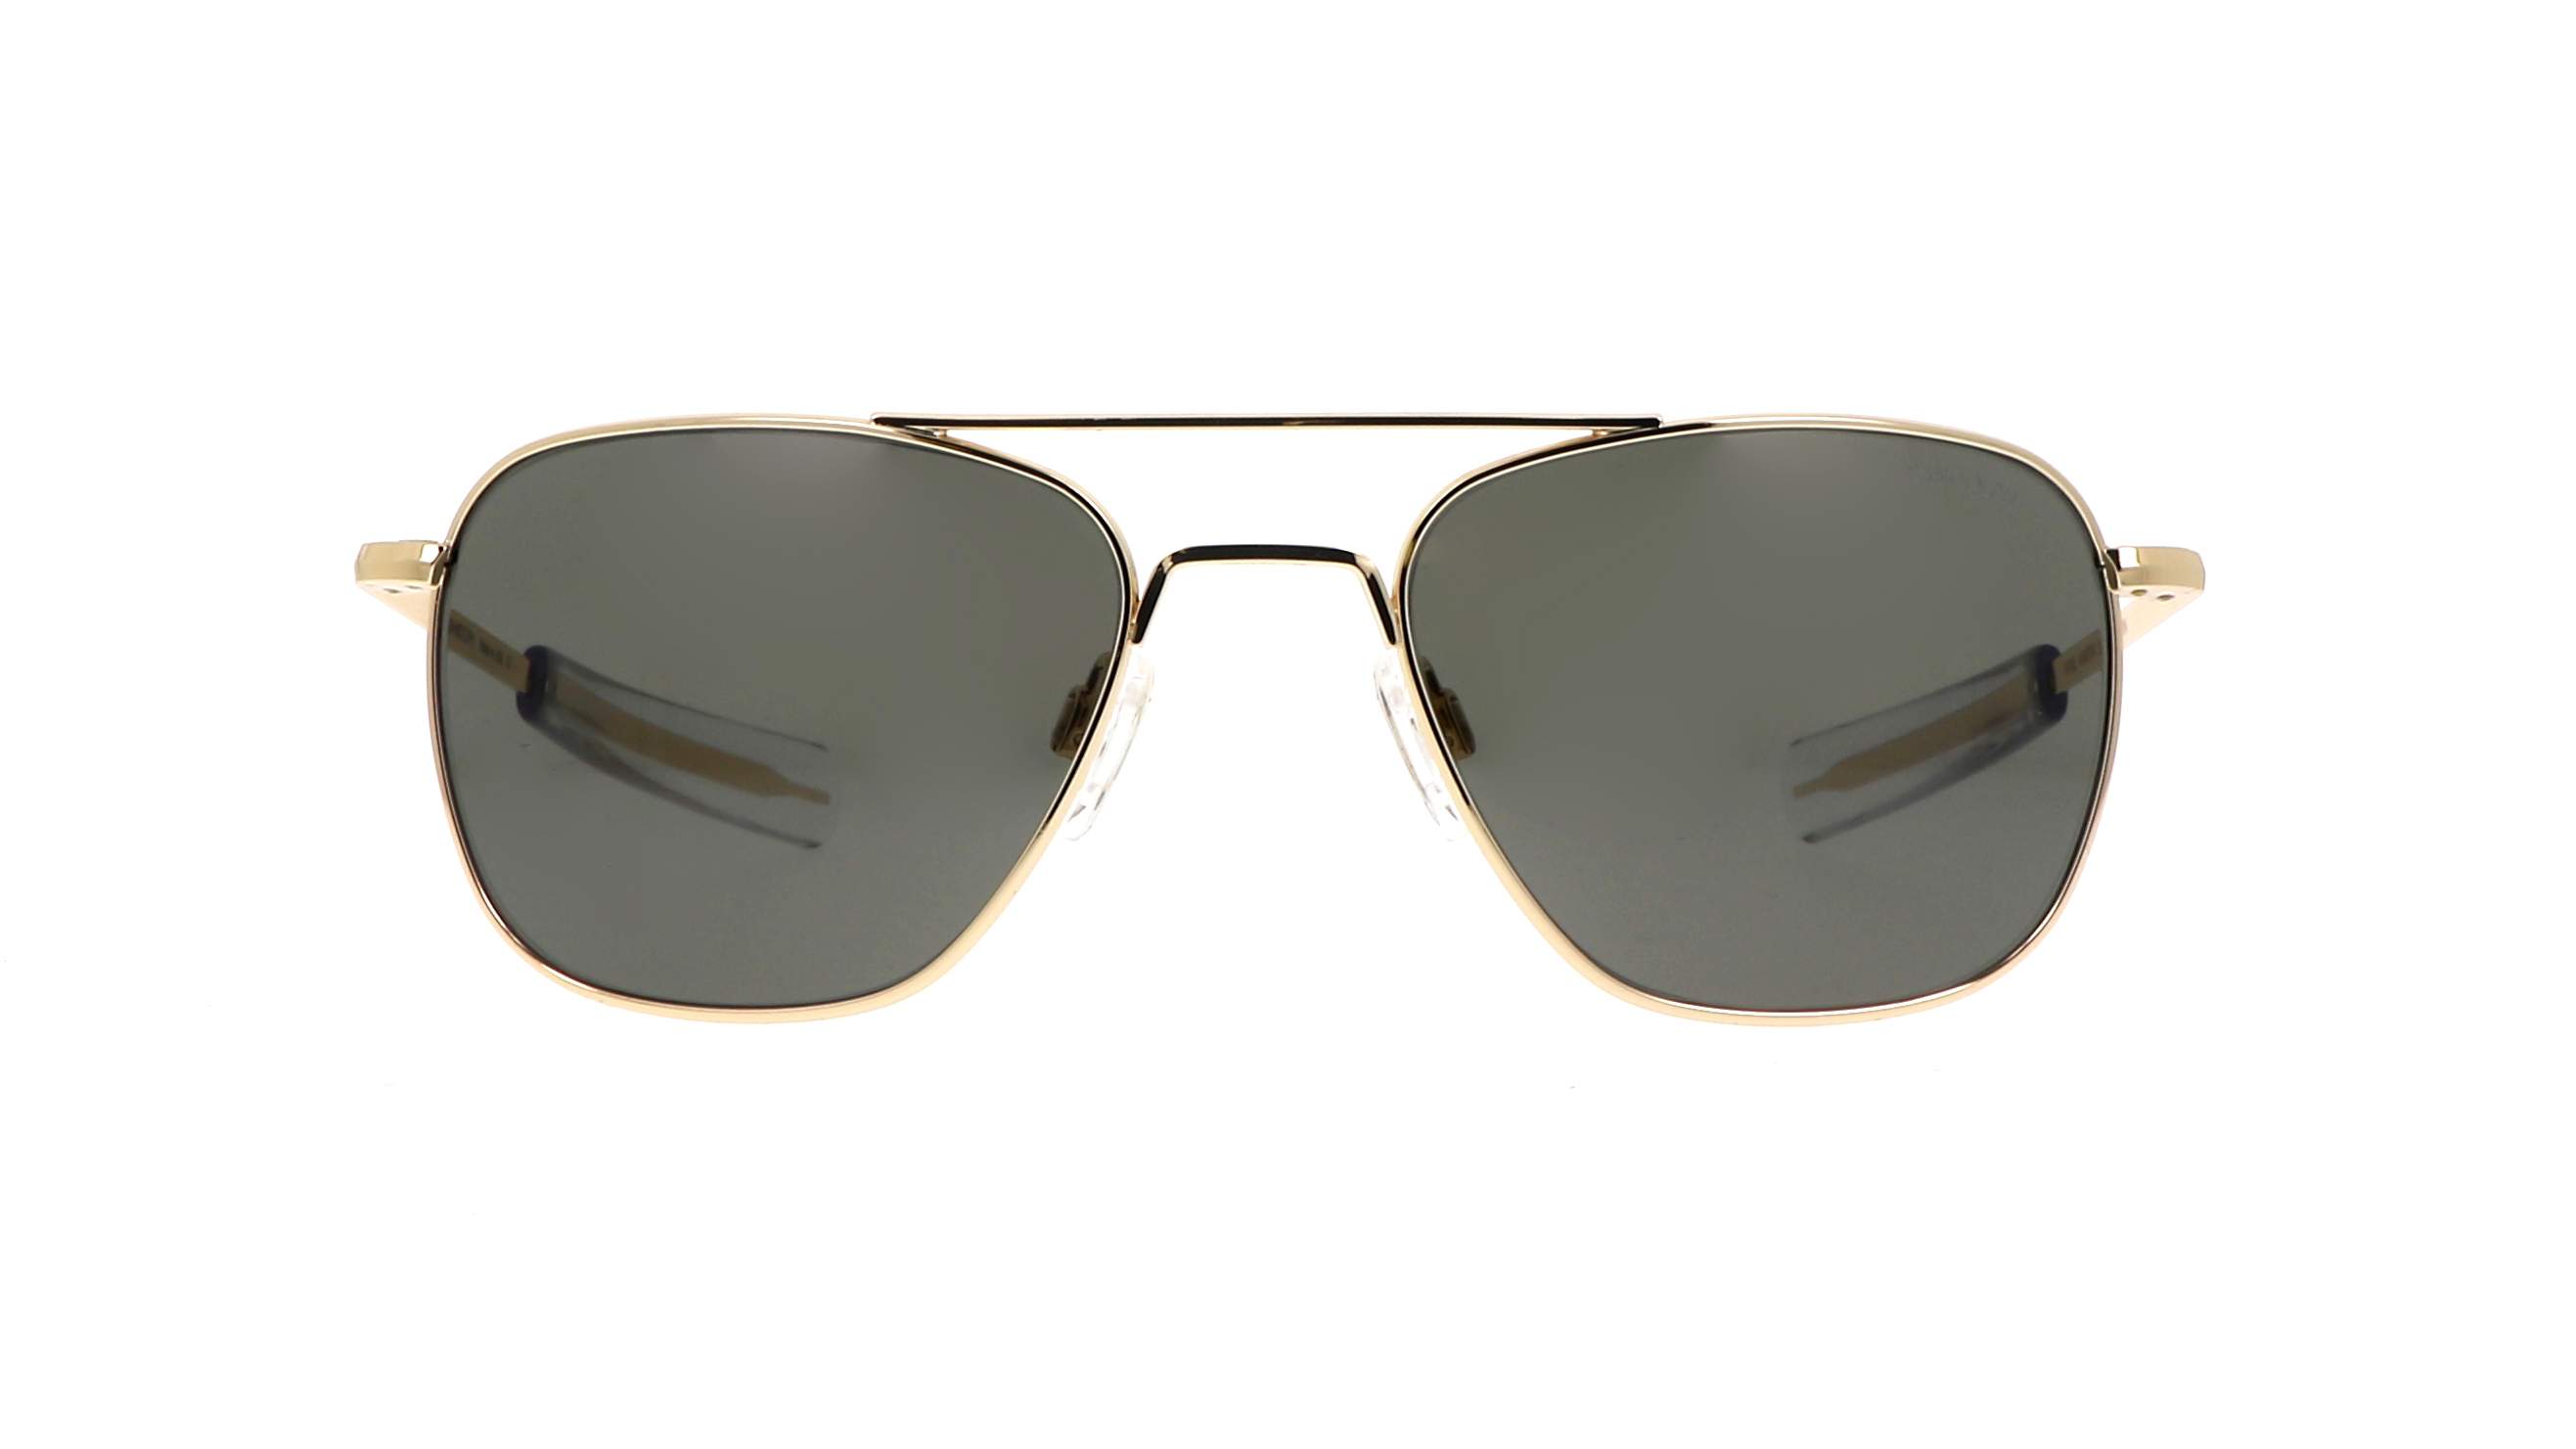 Sunglasses Randolph Aviator 23K Gold Military special edition Gold ...